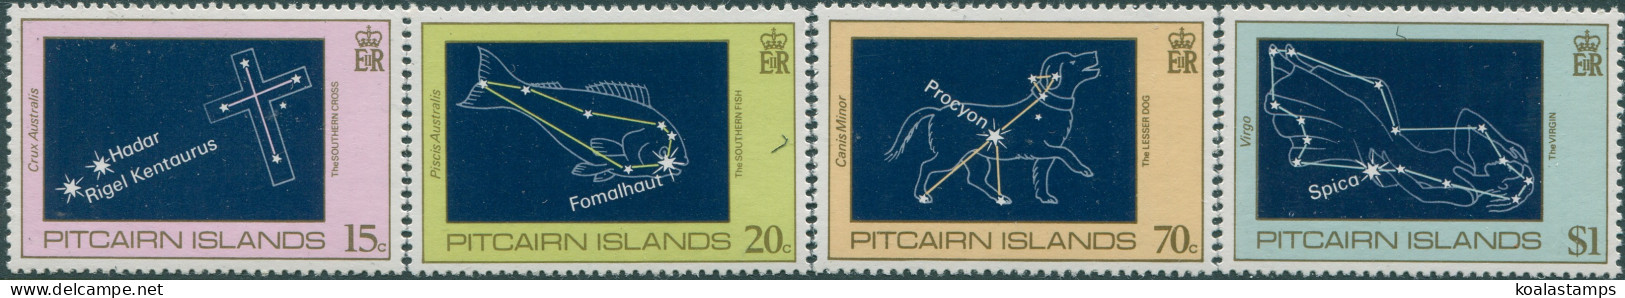 Pitcairn Islands 1984 SG259-262 Night Sky Set MNH - Pitcairn